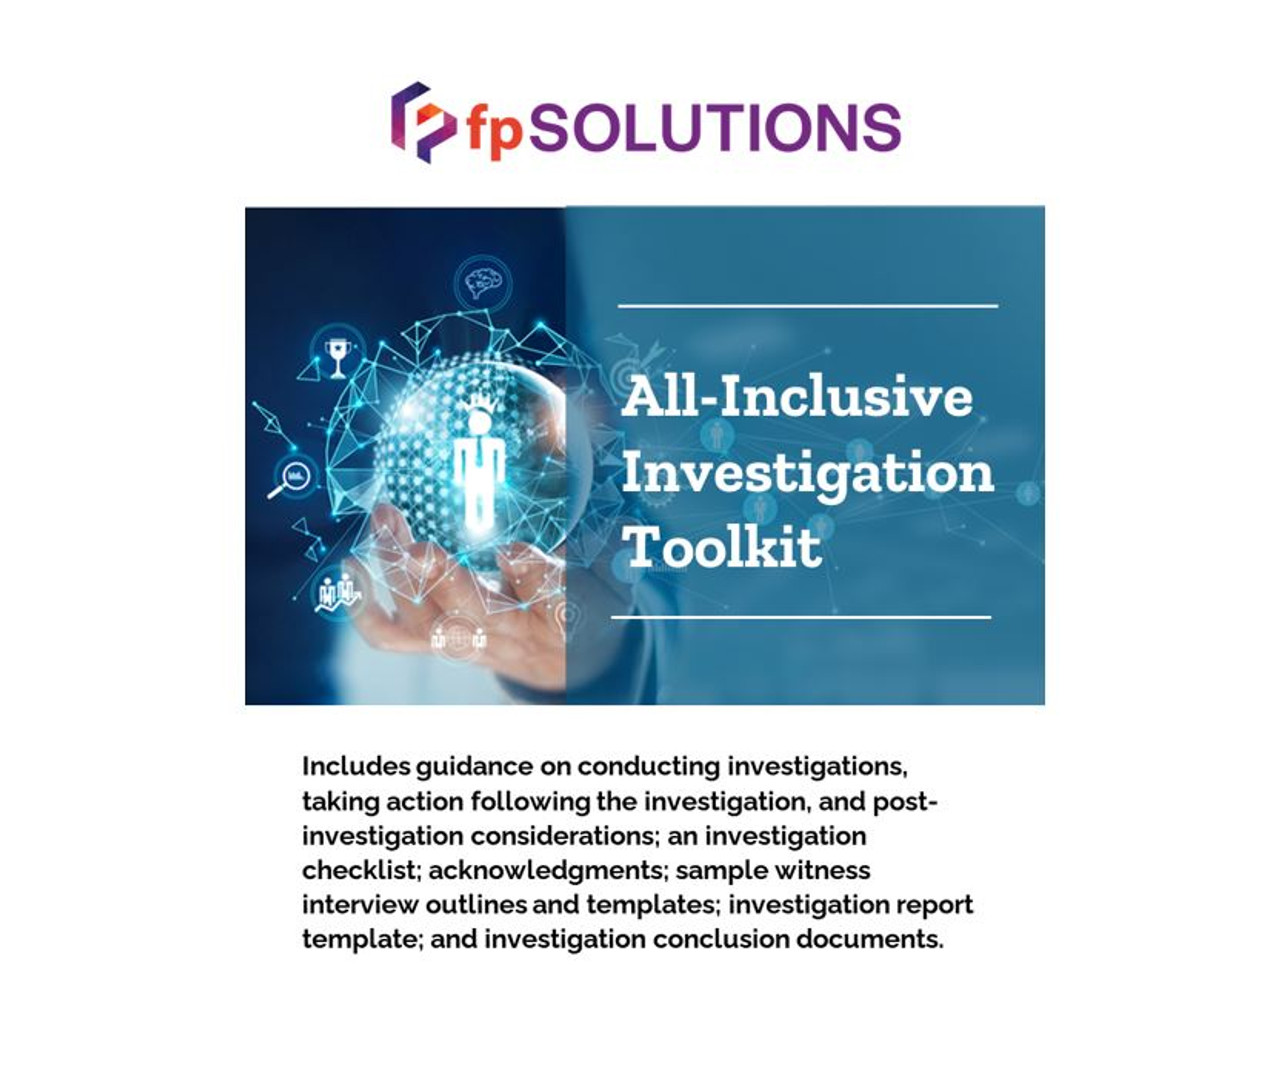 All-Inclusive Investigative Toolkit